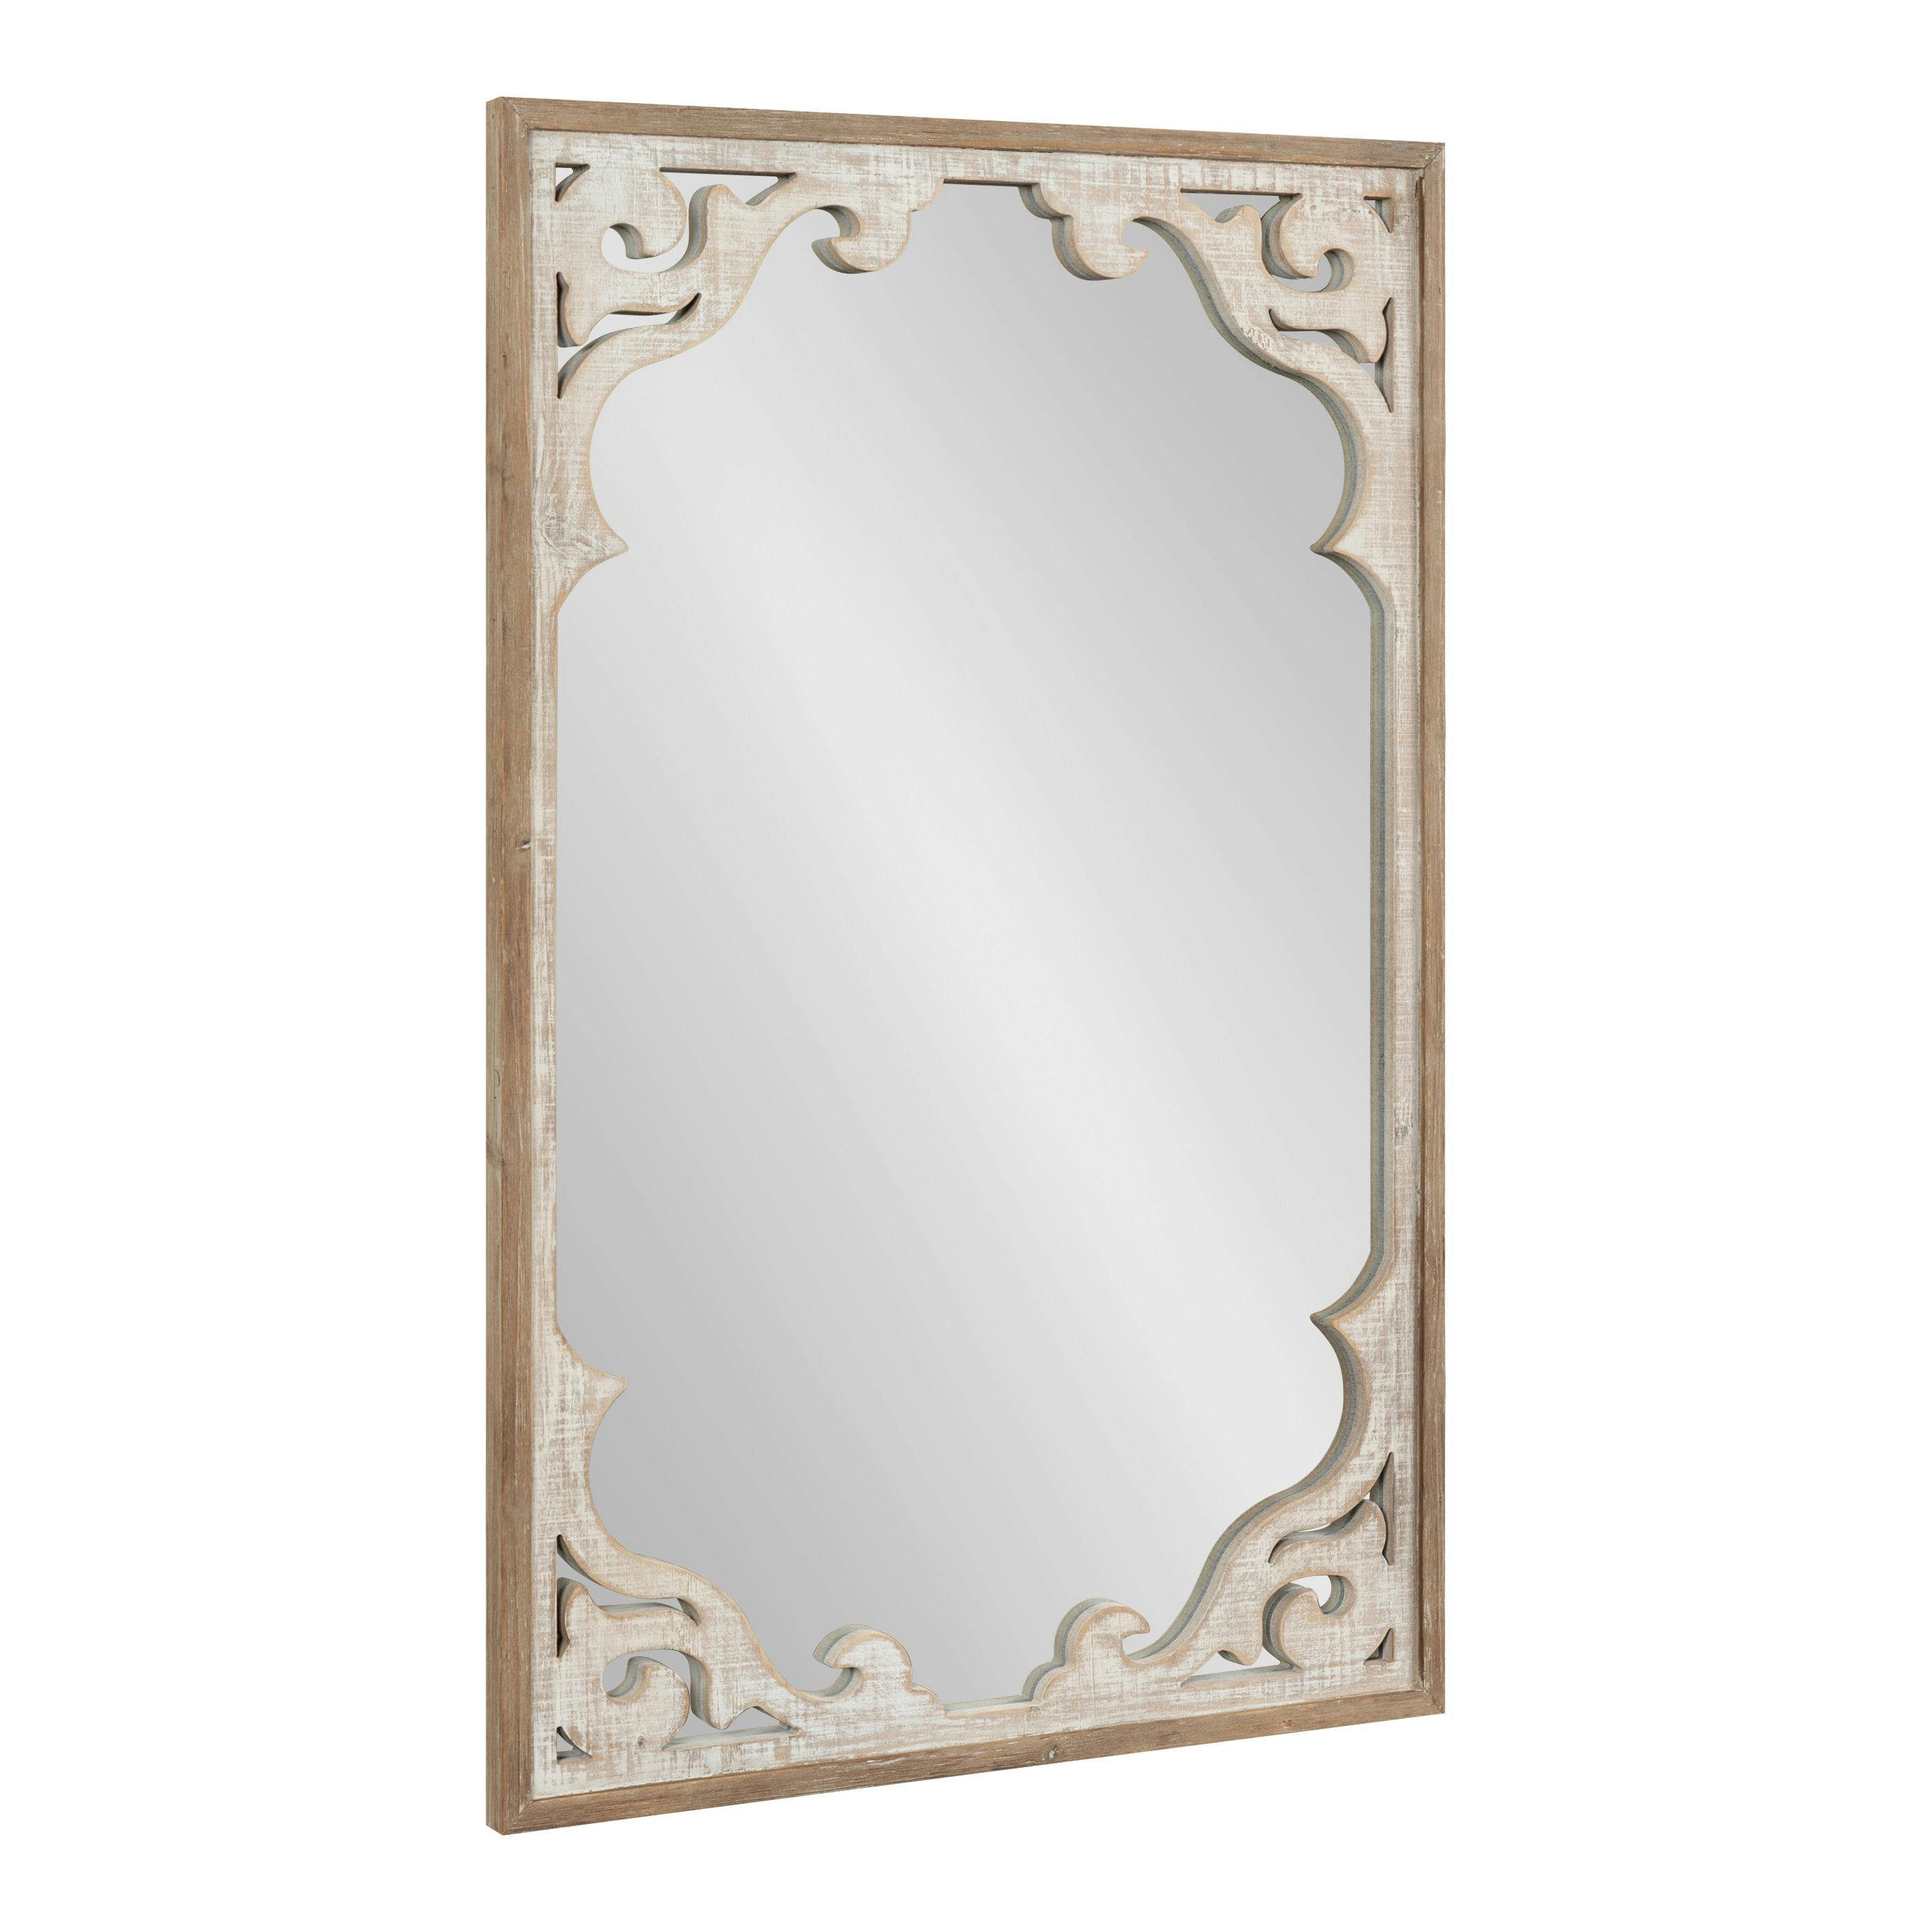 Shovali Rustic Brown 22x34 Ornate Wood-Carved Wall Mirror